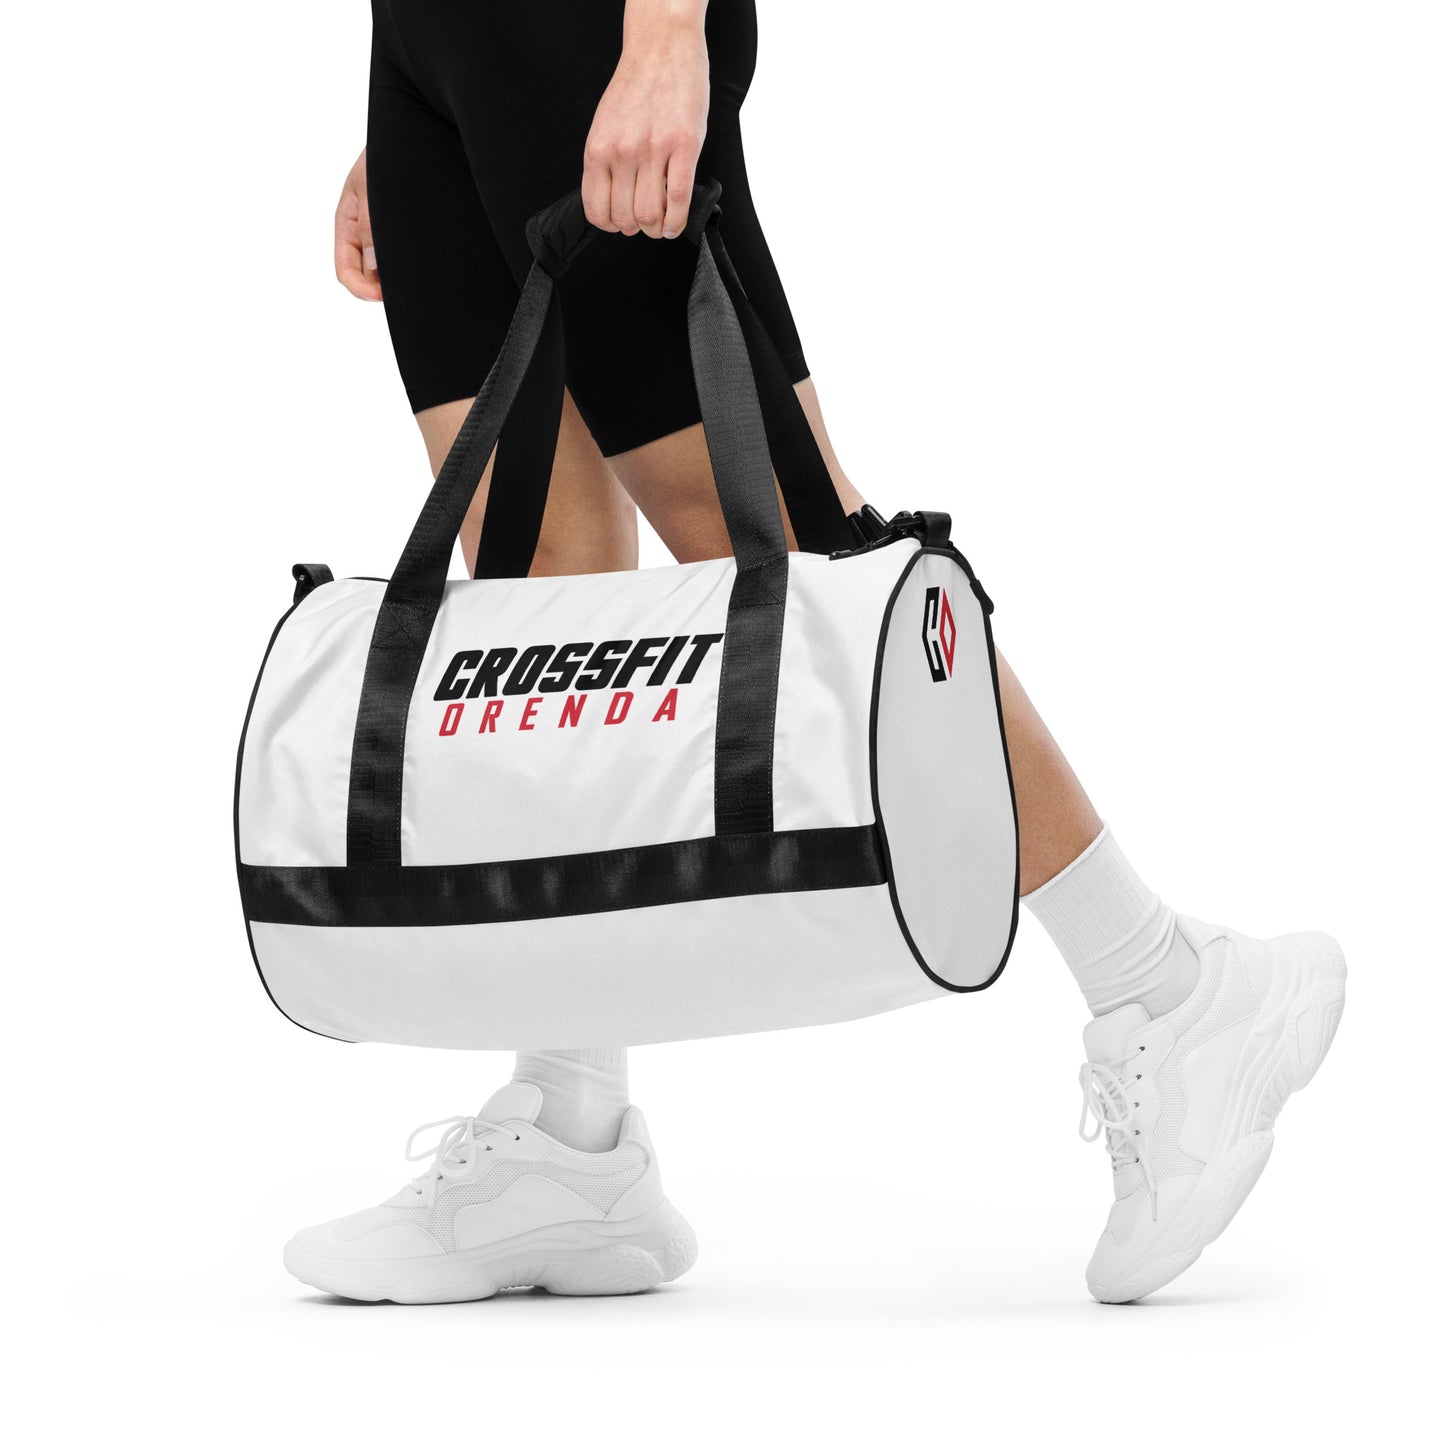 Crossfit Orenda Gym Bag